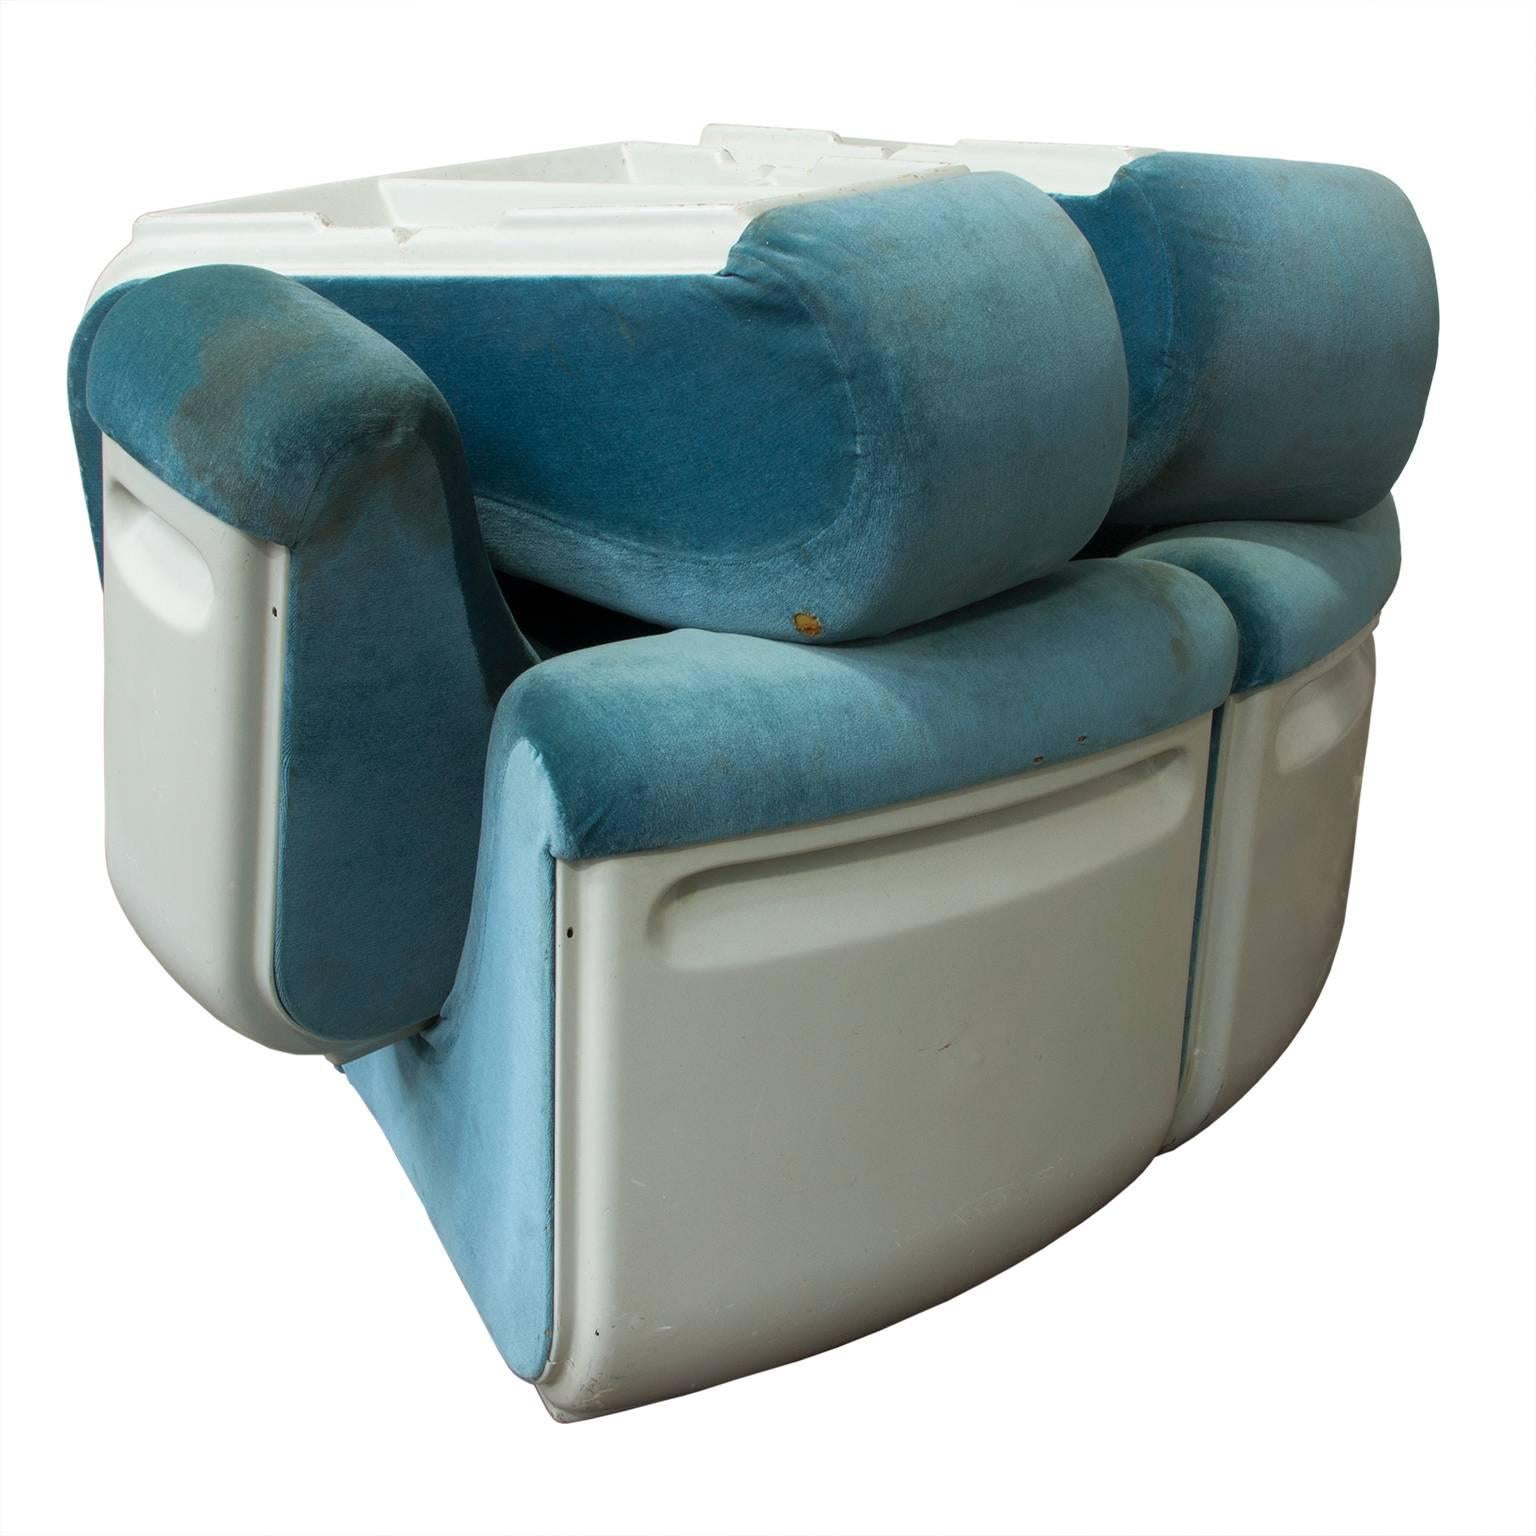 1969, Burkhardt Vogtherr for Rosenthal Studio-Linie, Turquoise Modulares Sofa For Sale 1